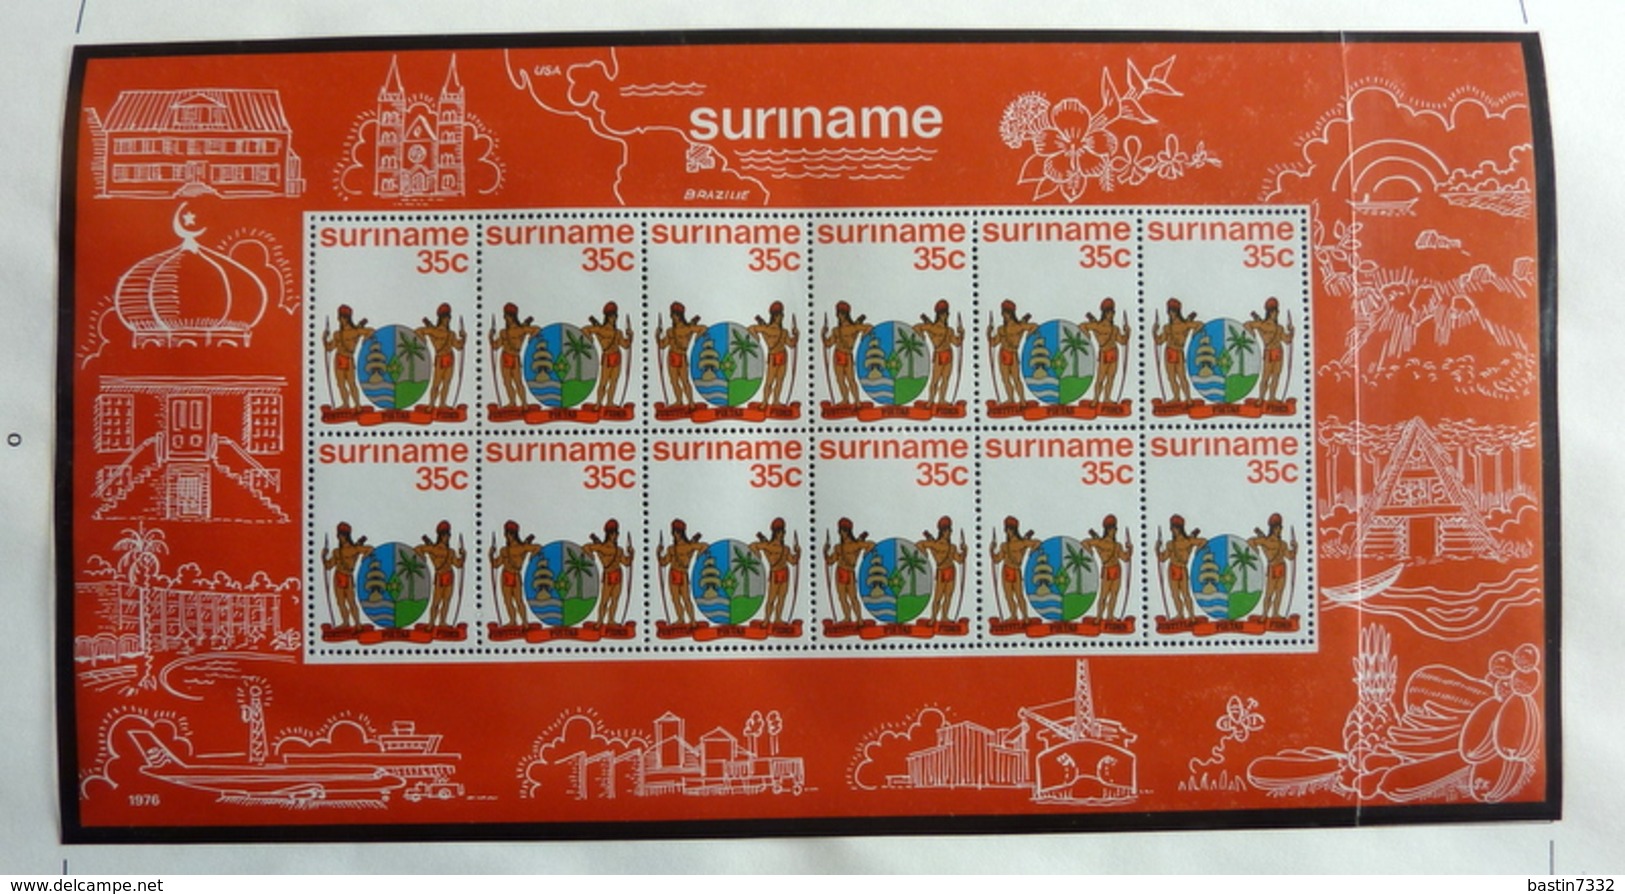 Suriname/Netherlands Indië/Curacao collection in Davo album